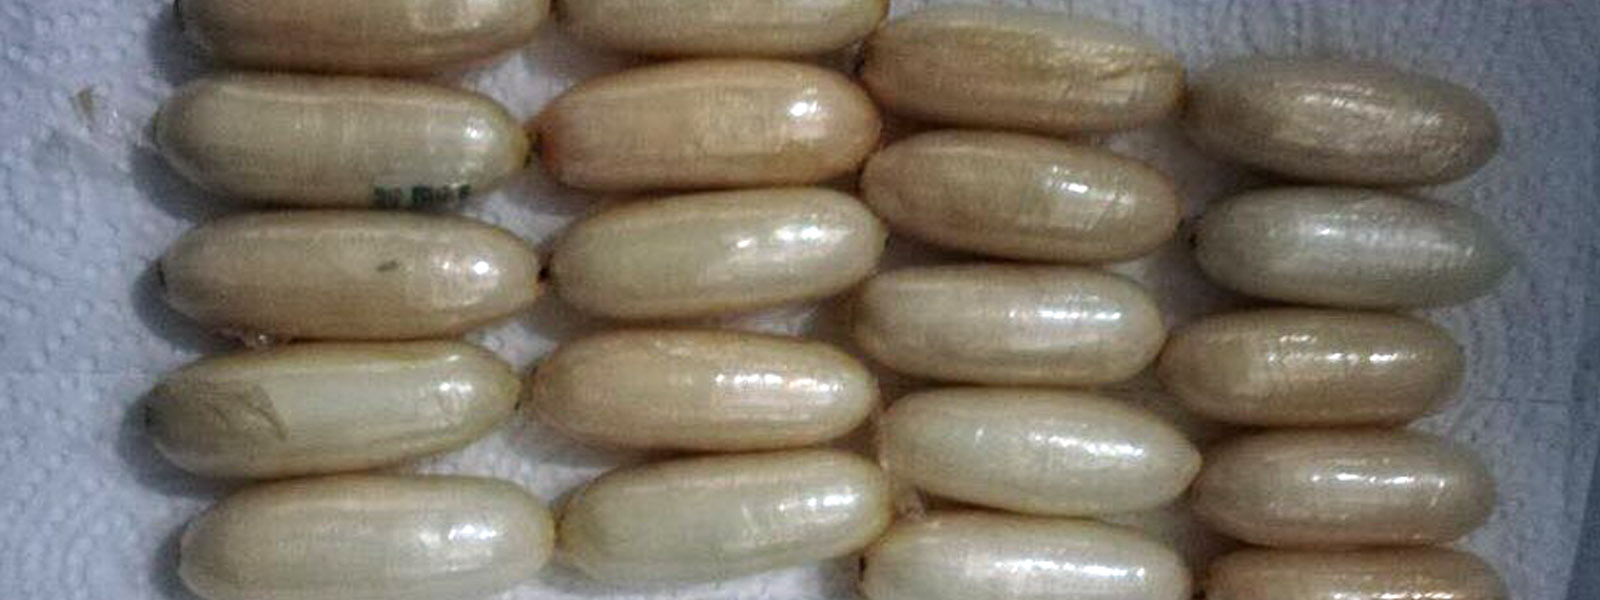 52 cocaine capsules retrieved from women